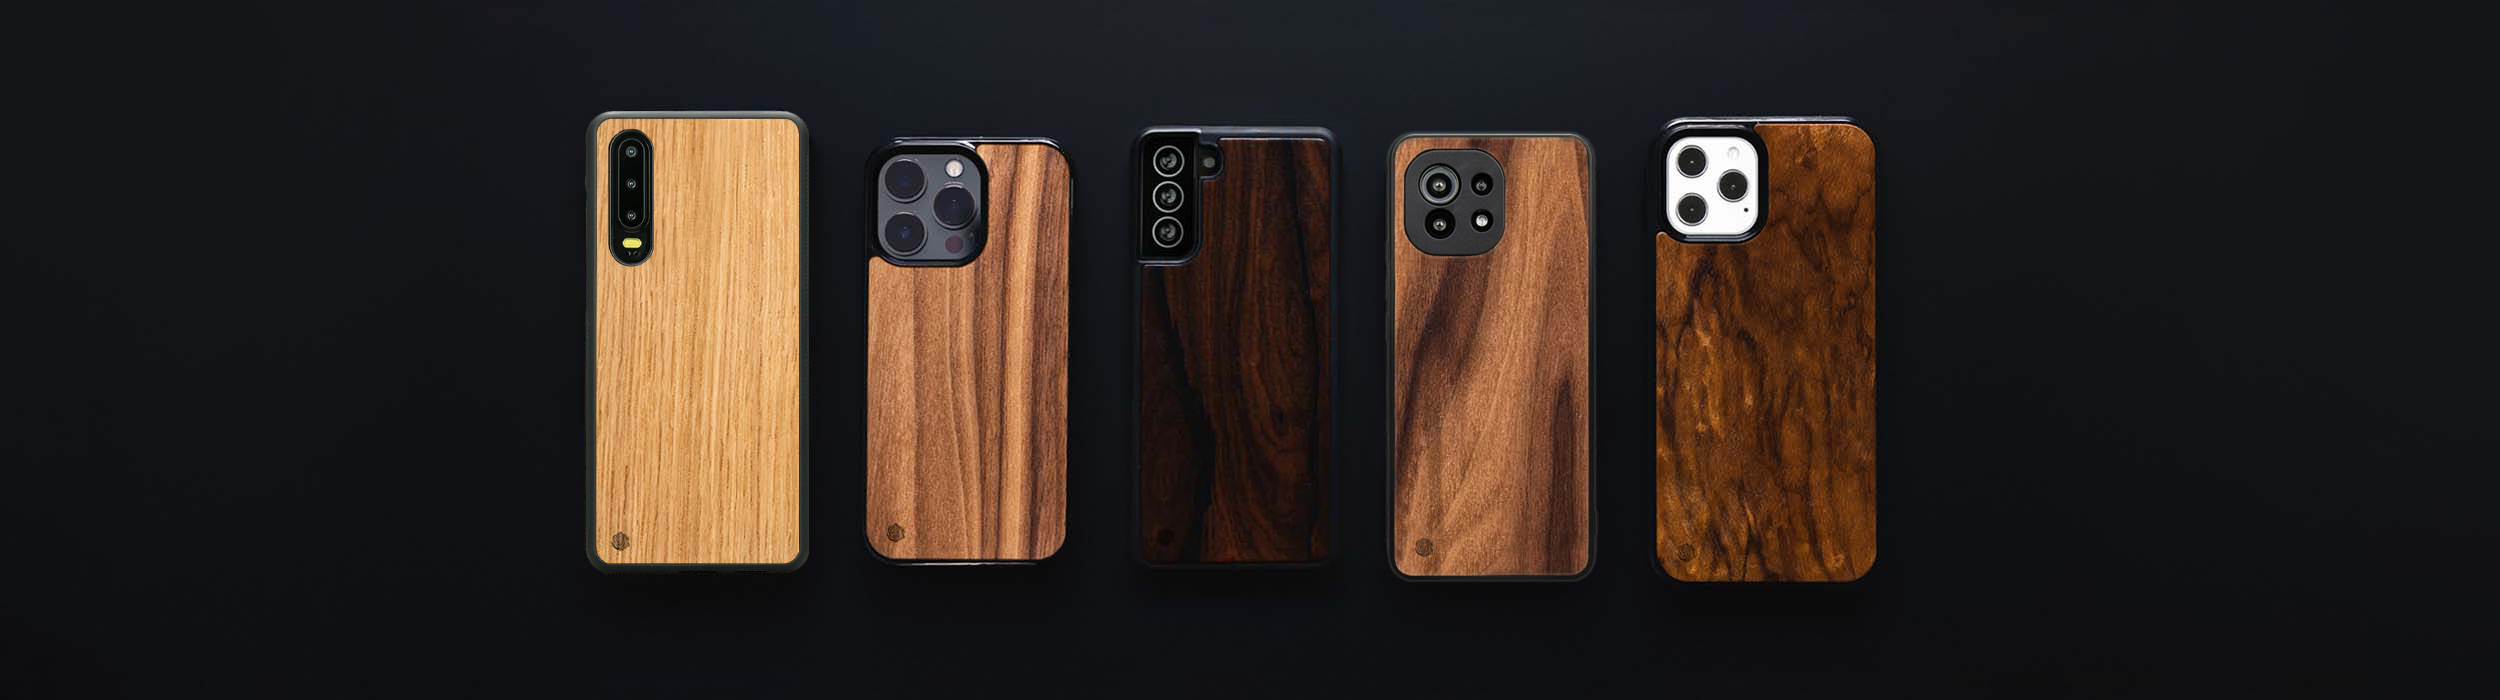 Xiaomi Mi 10 Lite Wooden Phone Cases